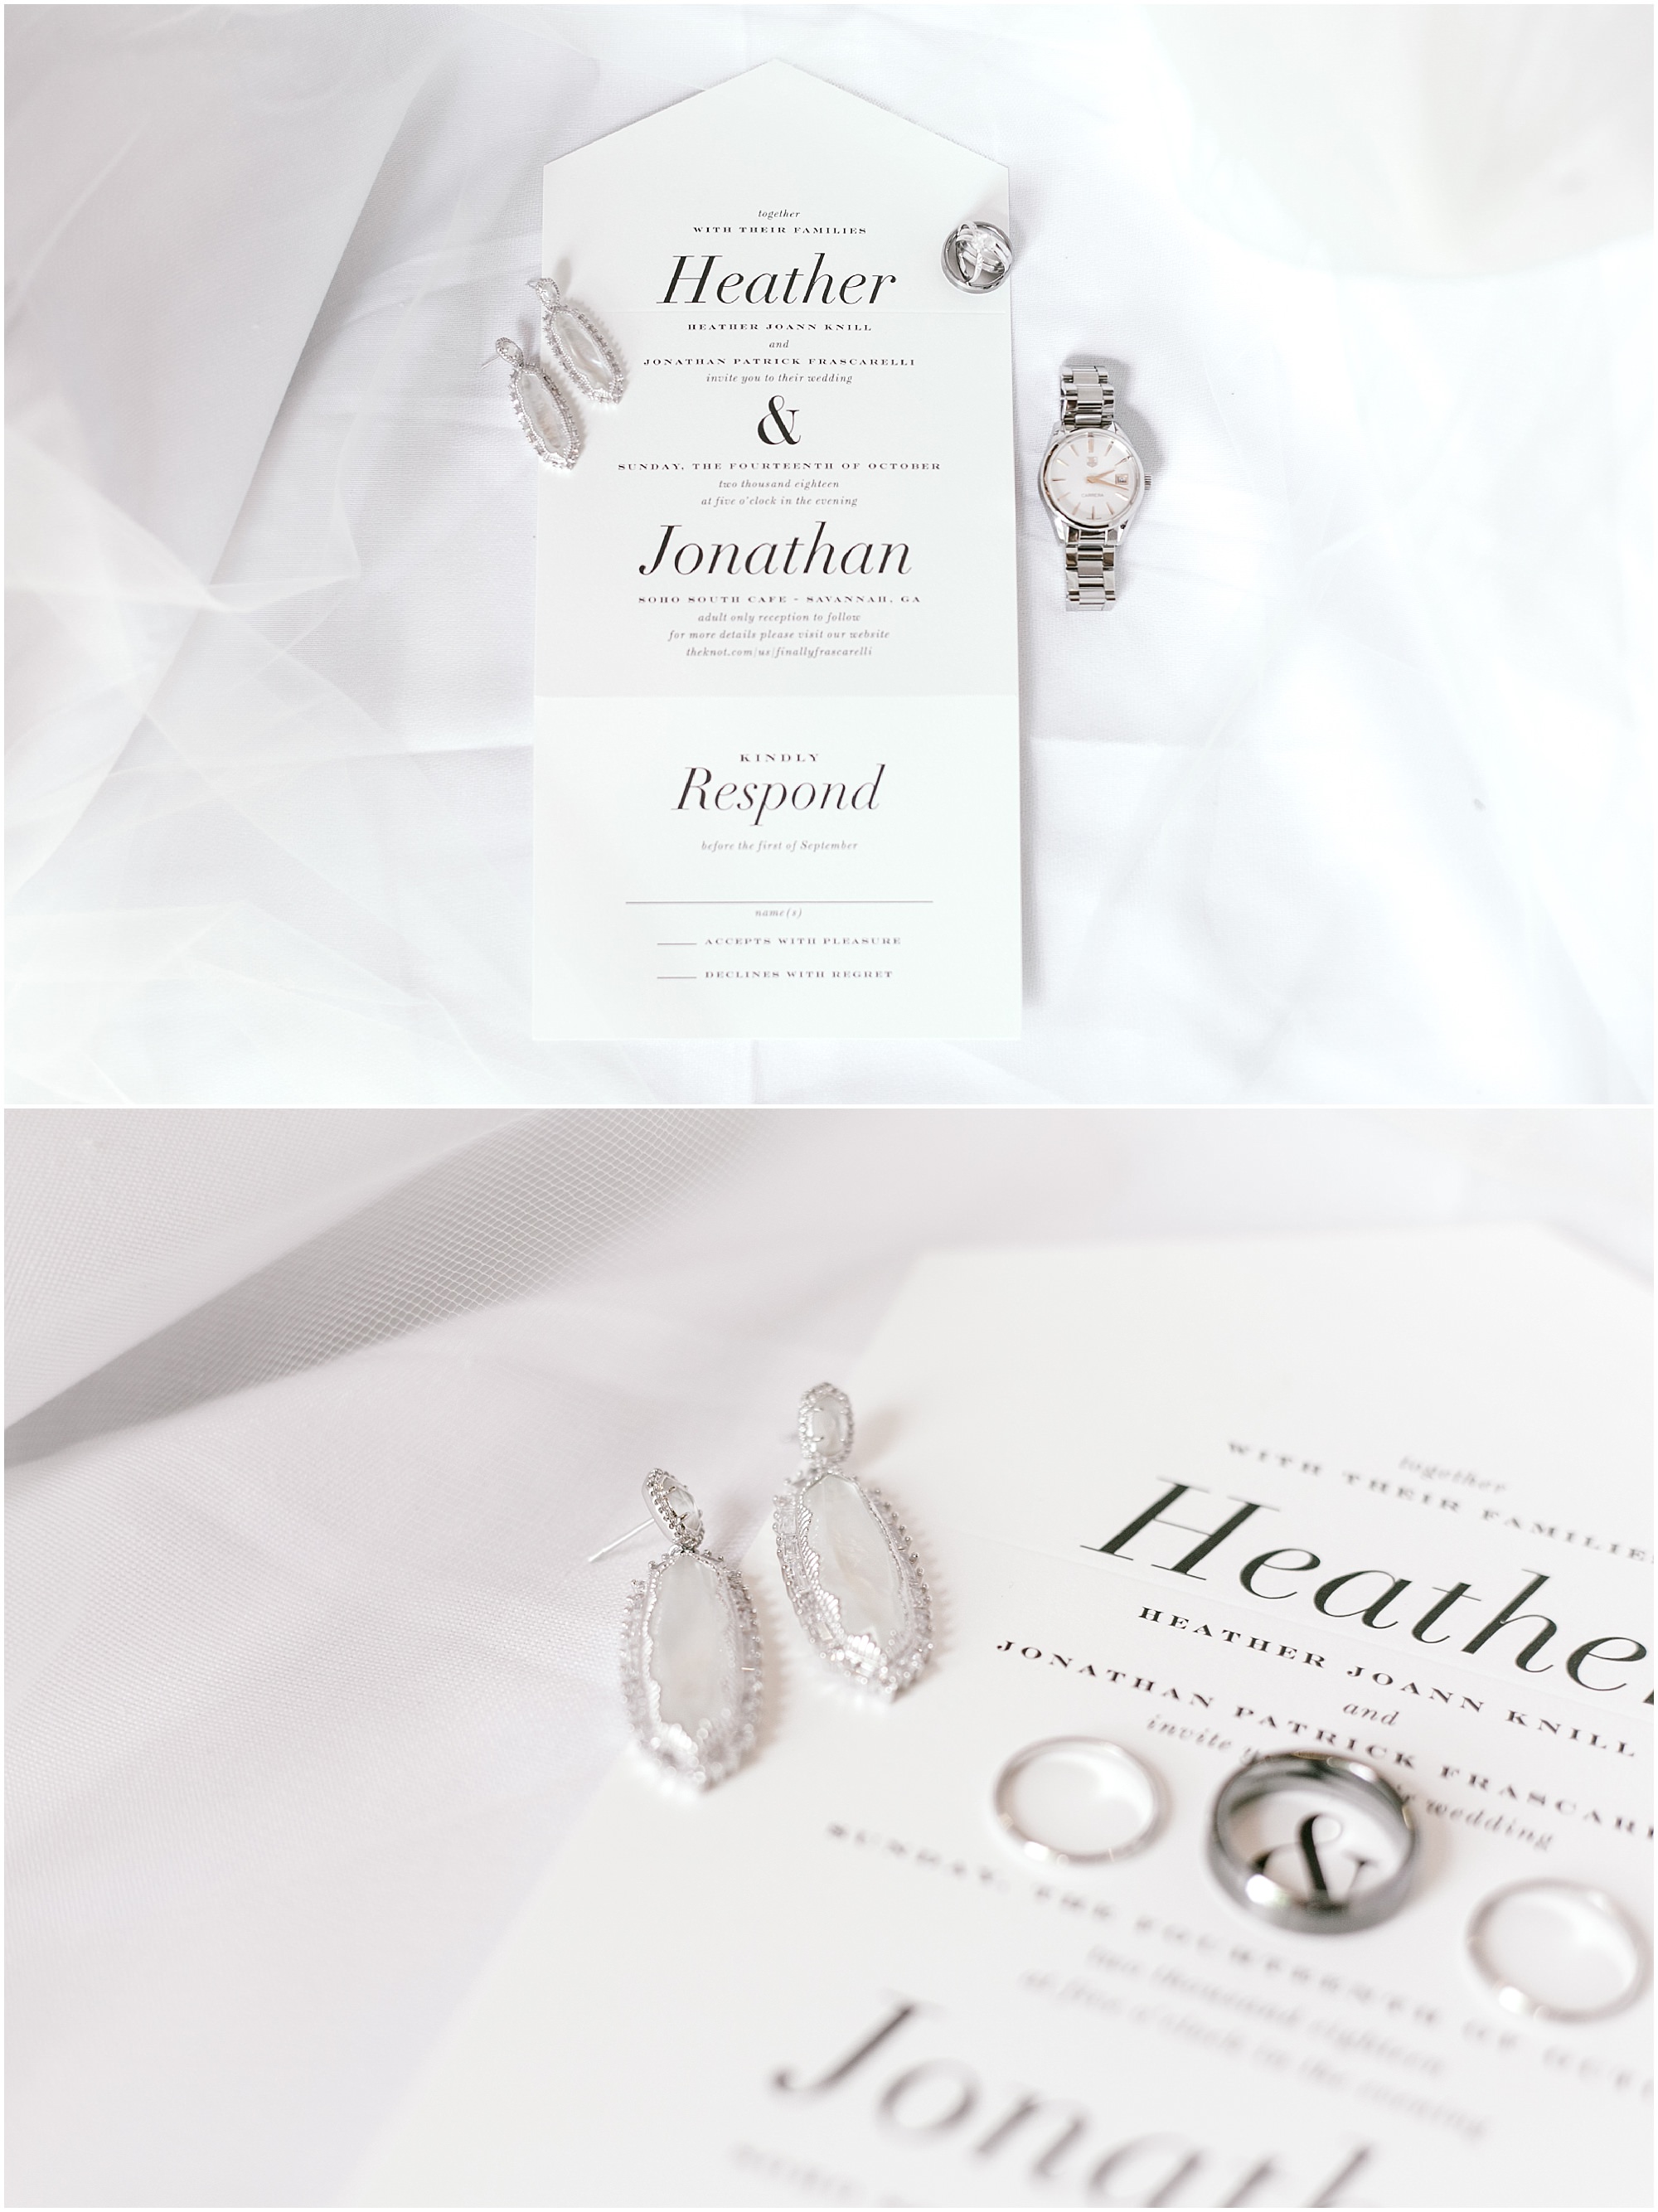 Sweet Historic Savannah wedding invitation with wedding jewelry on it. 